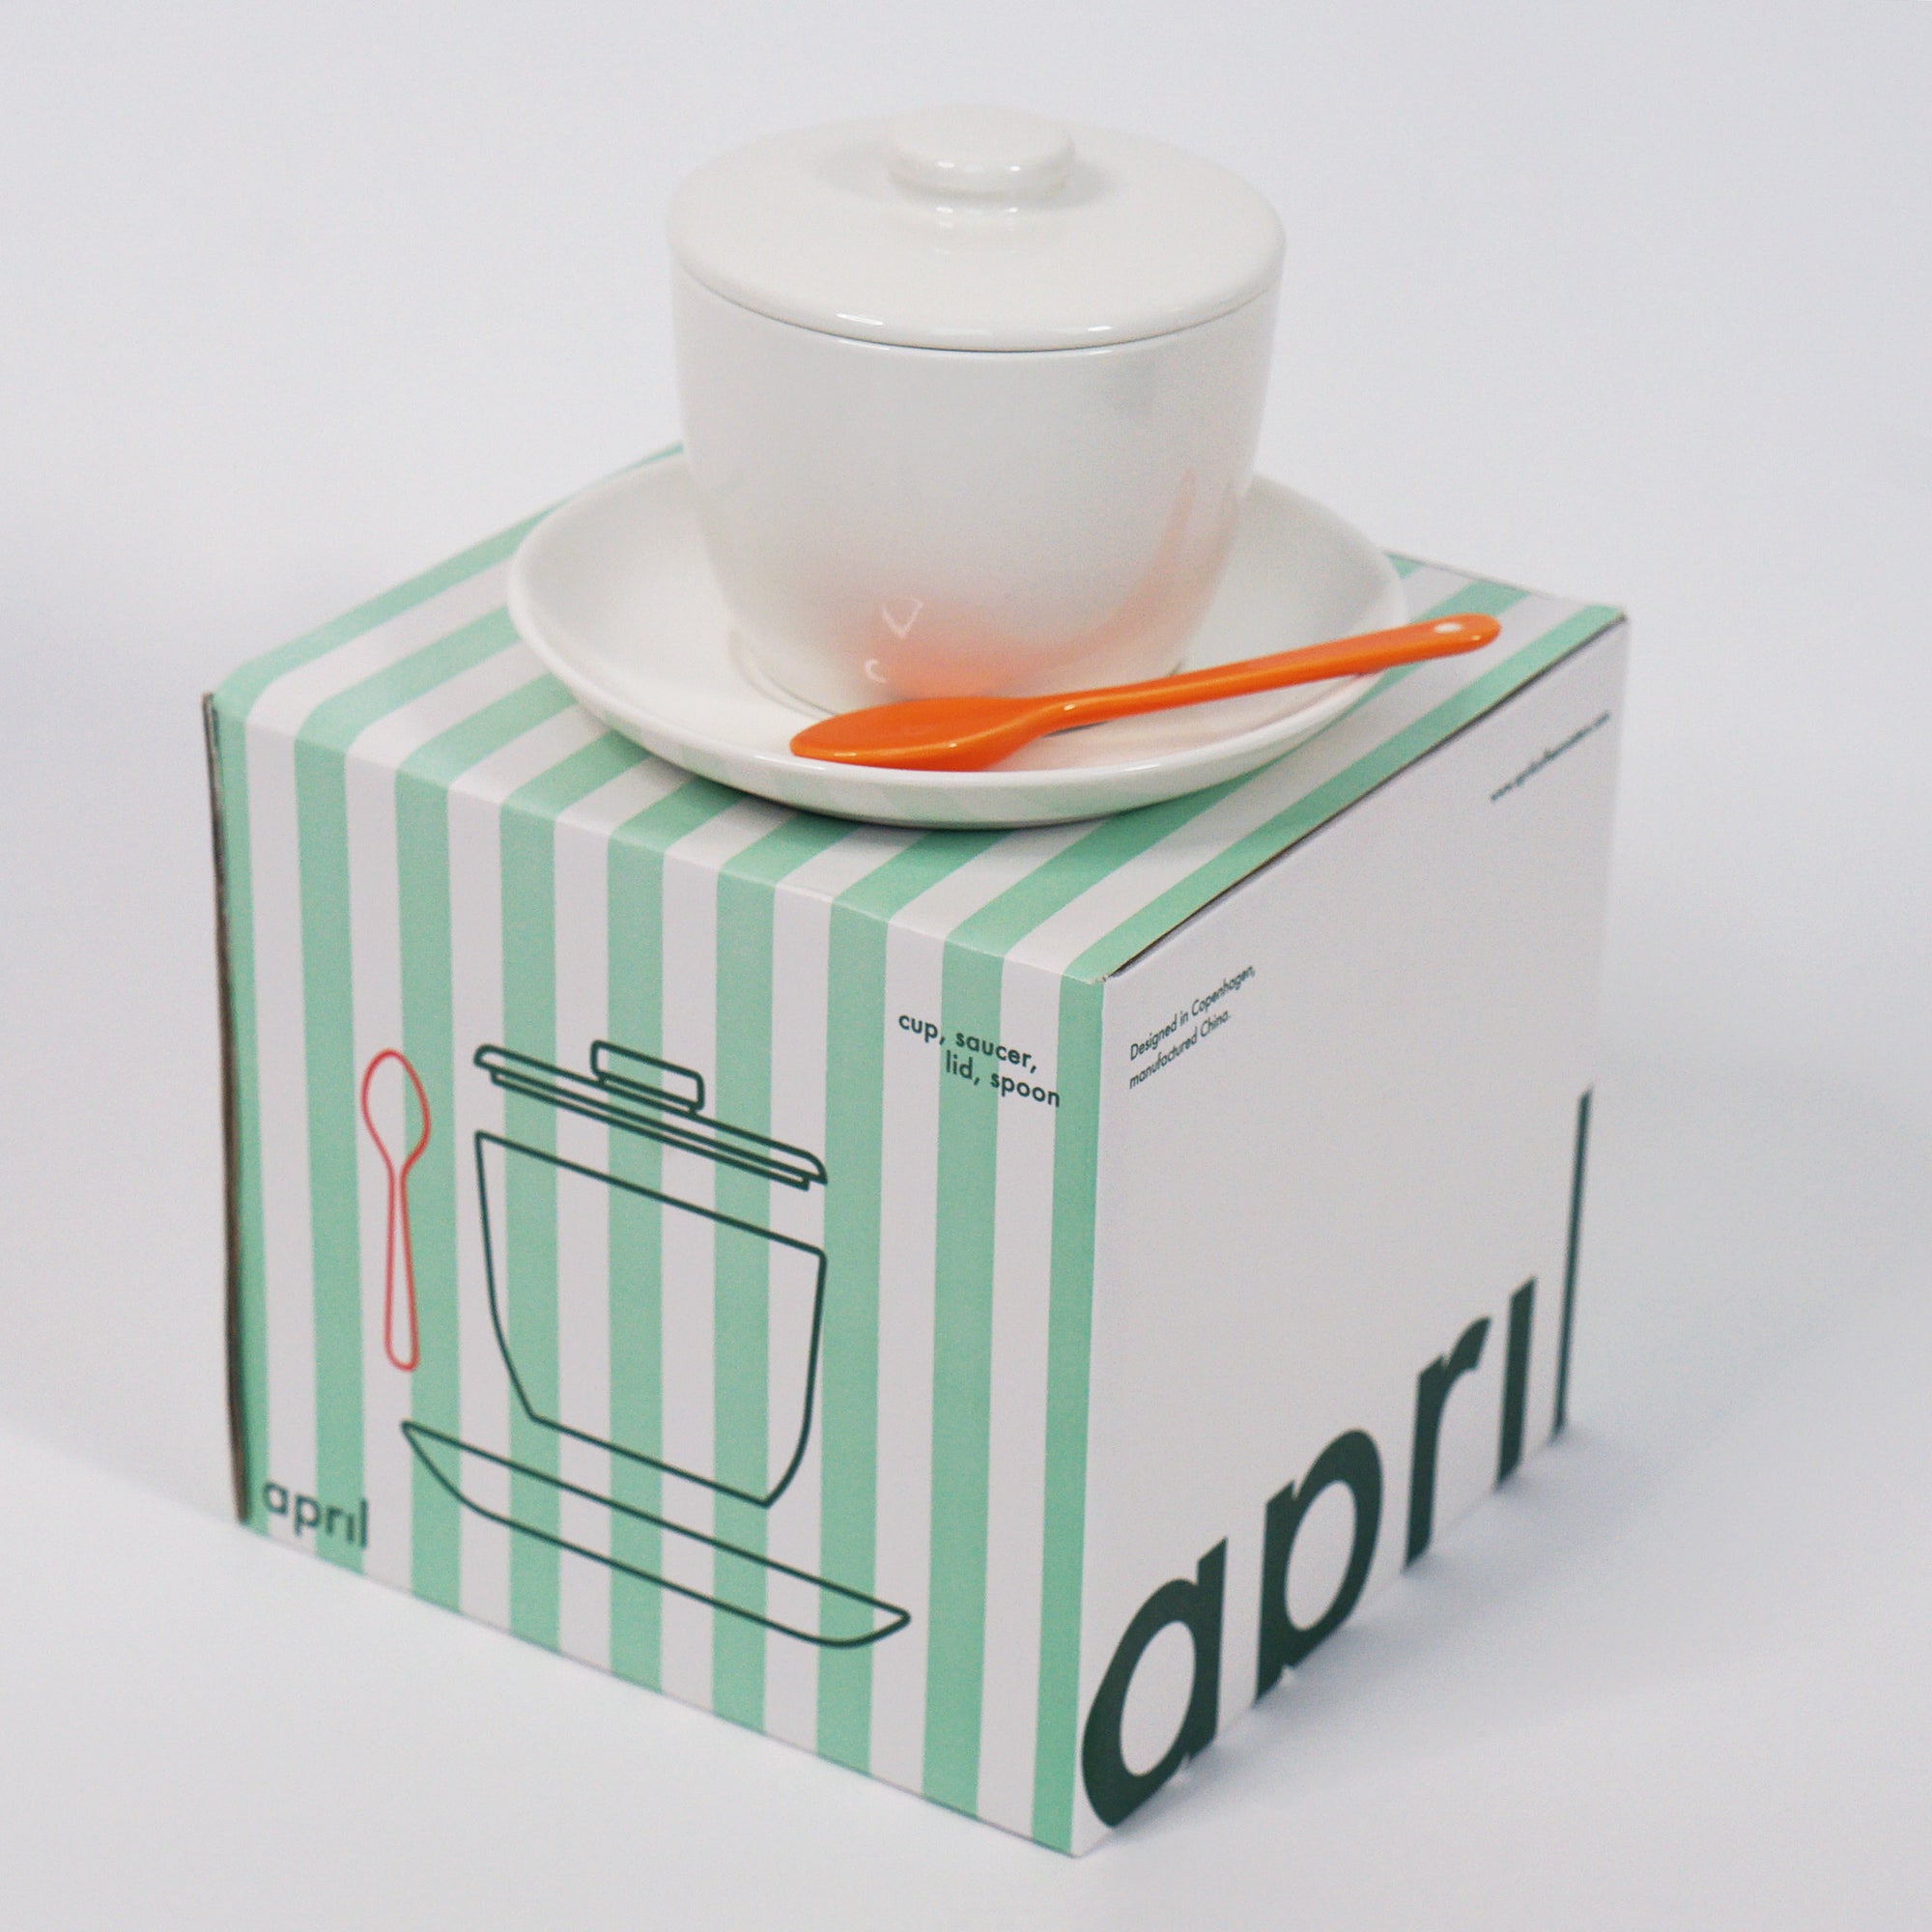 The April Filter Cup Kit